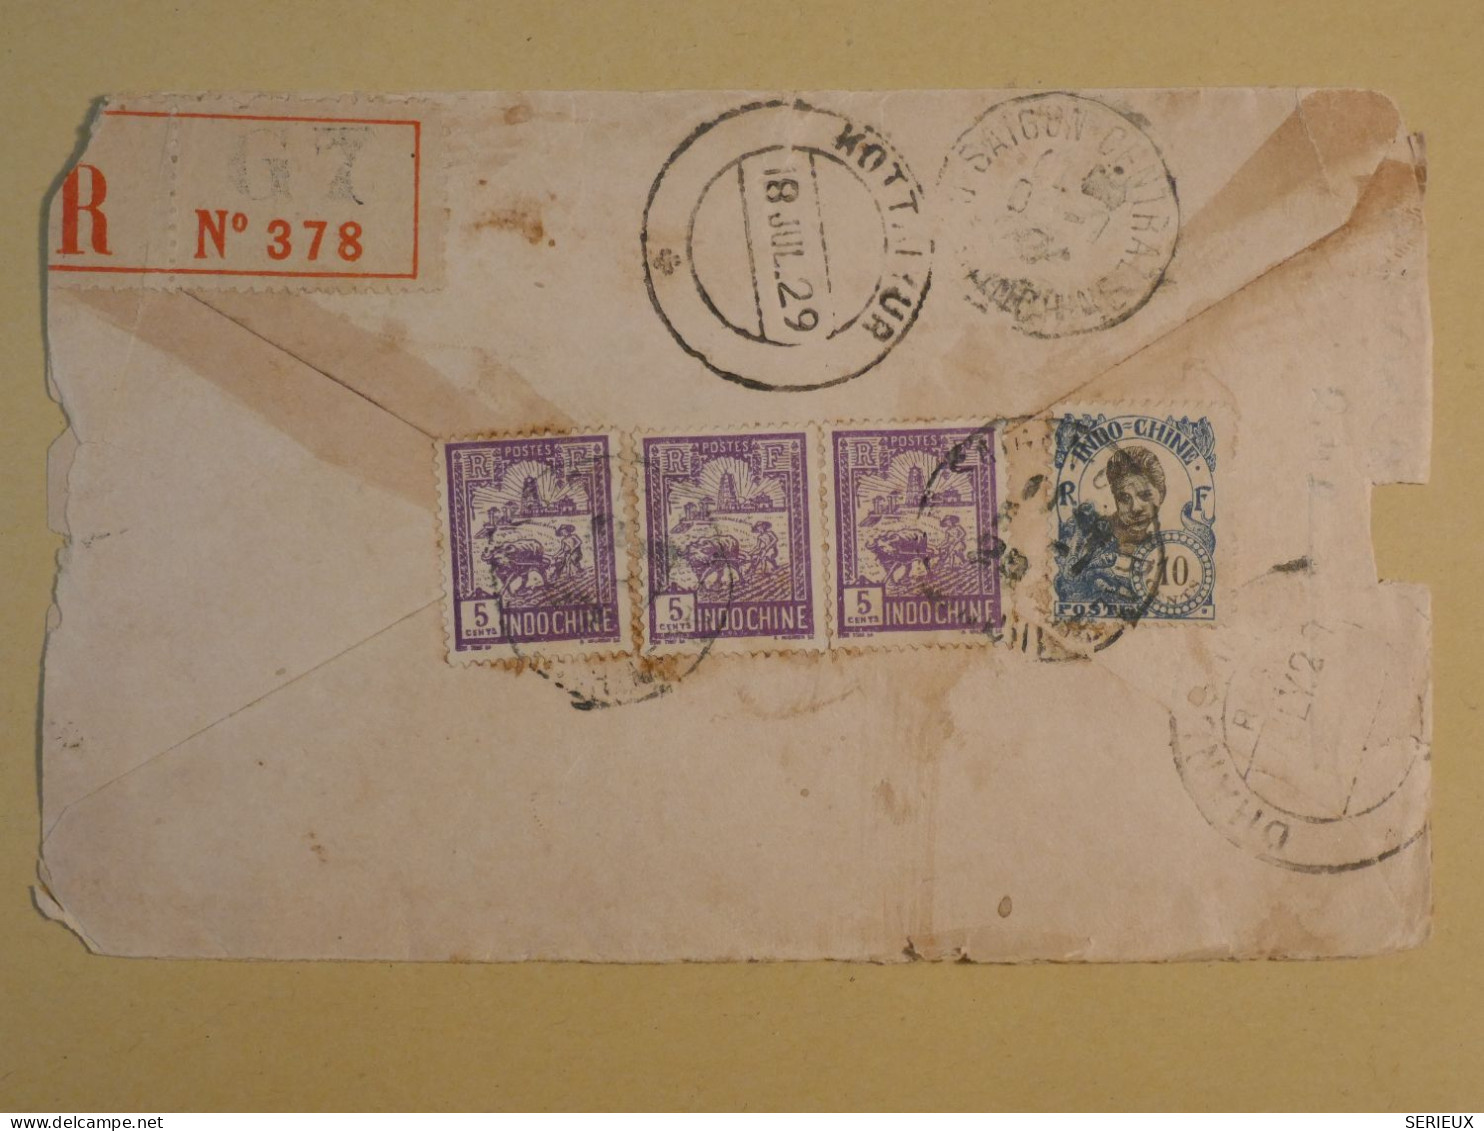 DG1  INDOCHINE BELLE LETTRE RECO.  1929 SAIGON    A  KOTAIYOUR SINGAPORE   +AFF. INTERESSANT+++ - Briefe U. Dokumente